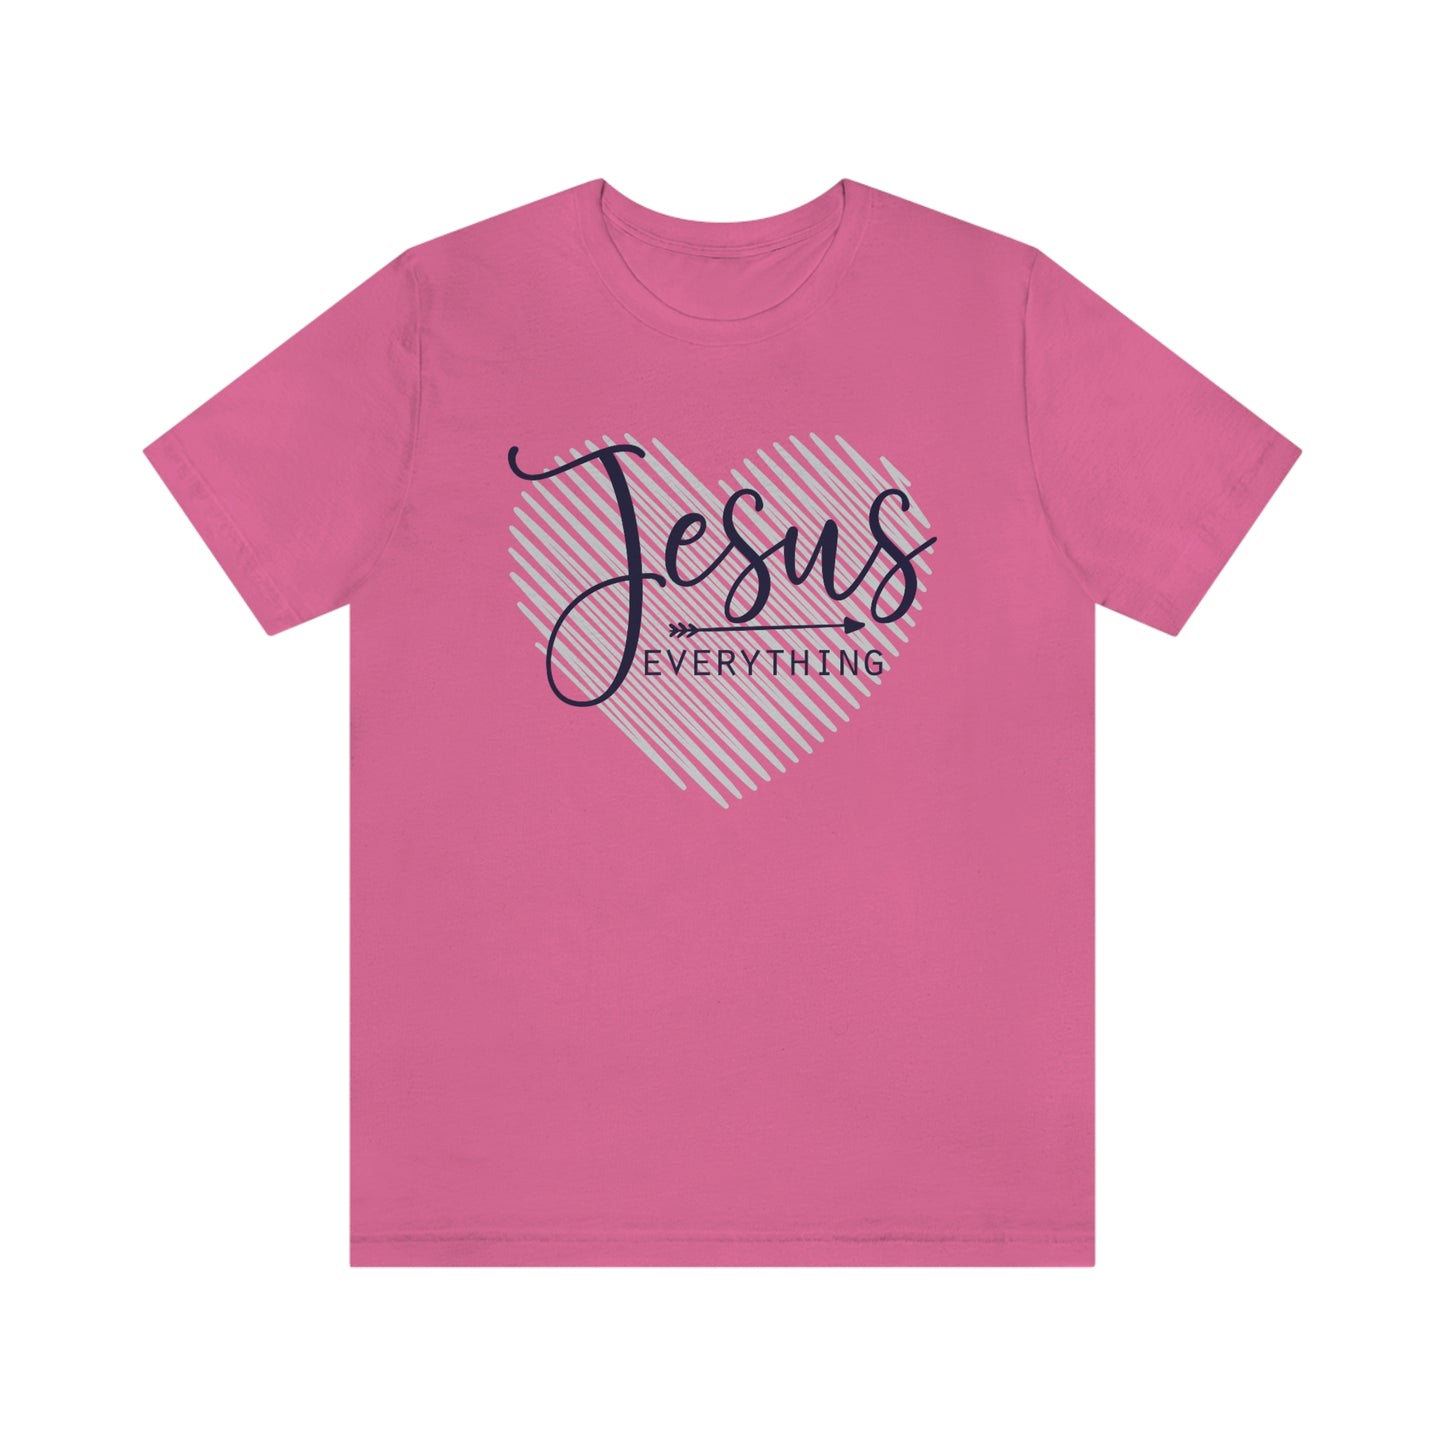 Jesus Over Everything Heart Shirt